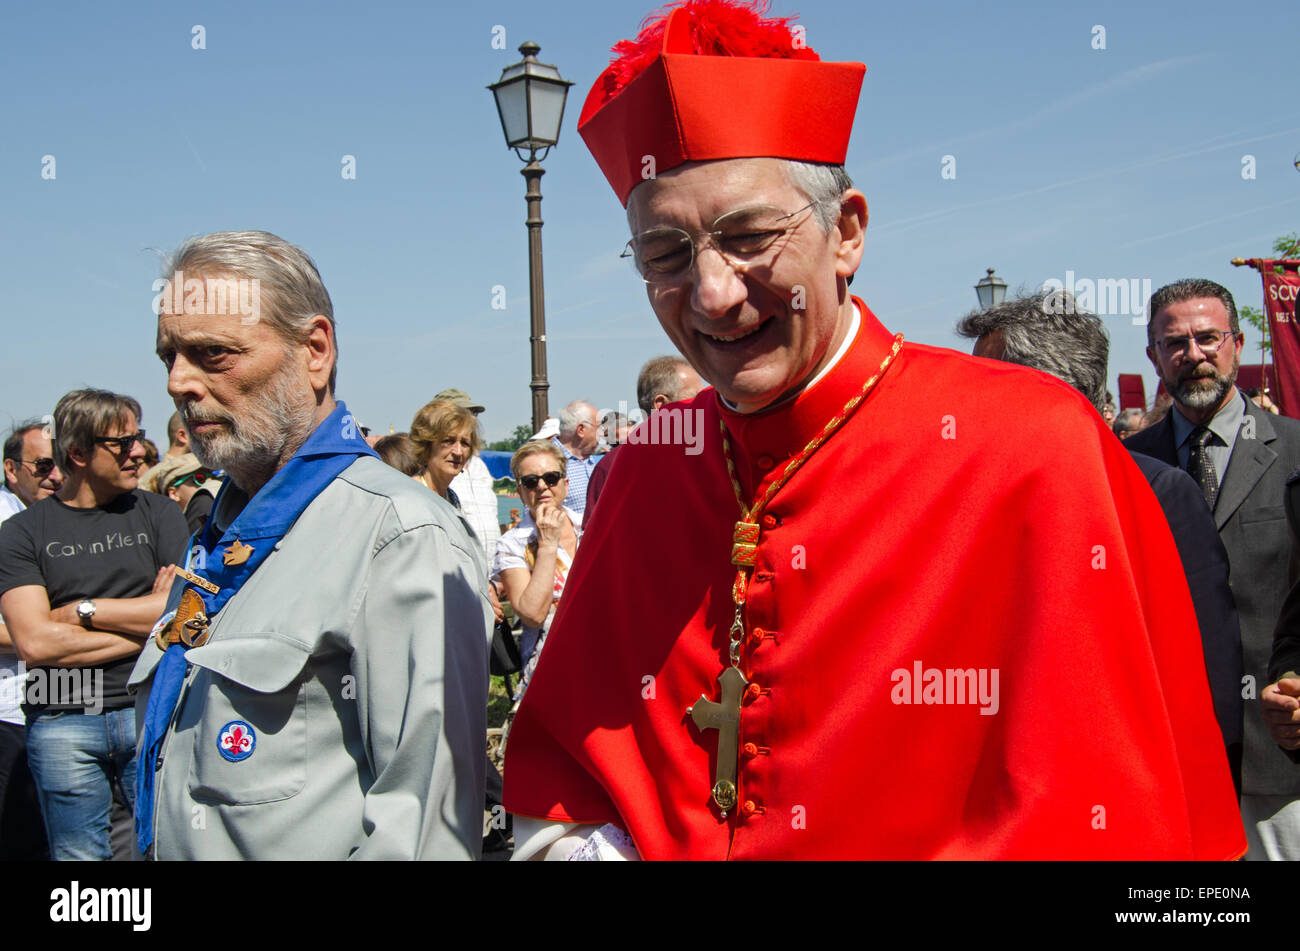 Venedig, Italien - 17. Mai 2015: Der Patriarch von Venedig - Francesco Moraglia - während die Festa della Sensa, Lido di Venezia. Stockfoto